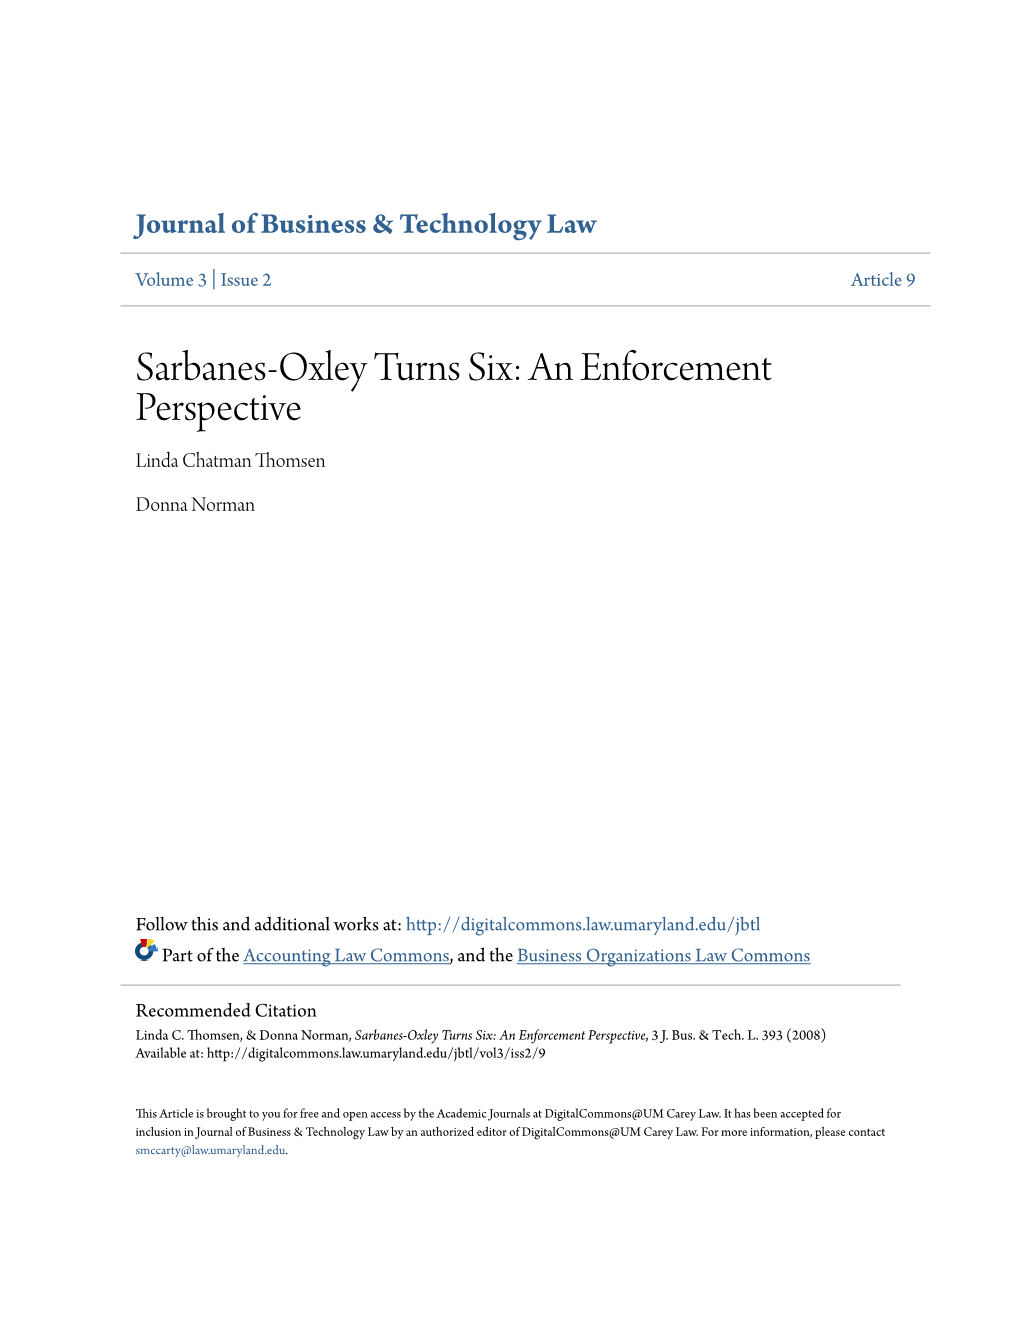 Sarbanes-Oxley Turns Six: an Enforcement Perspective Linda Chatman Thomsen